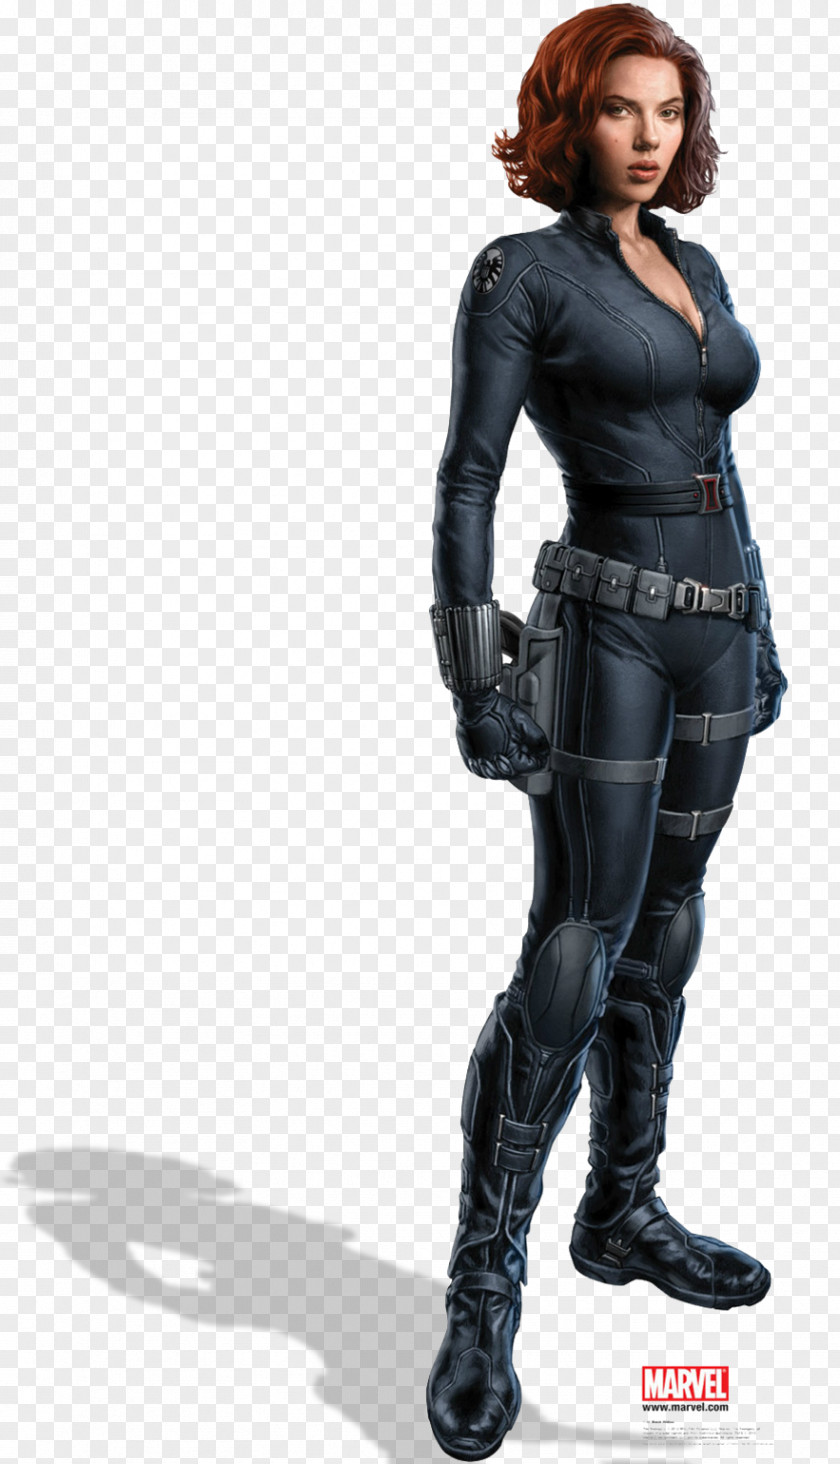 Black Widow Image Scarlett Johansson Iron Man Clint Barton The Avengers PNG